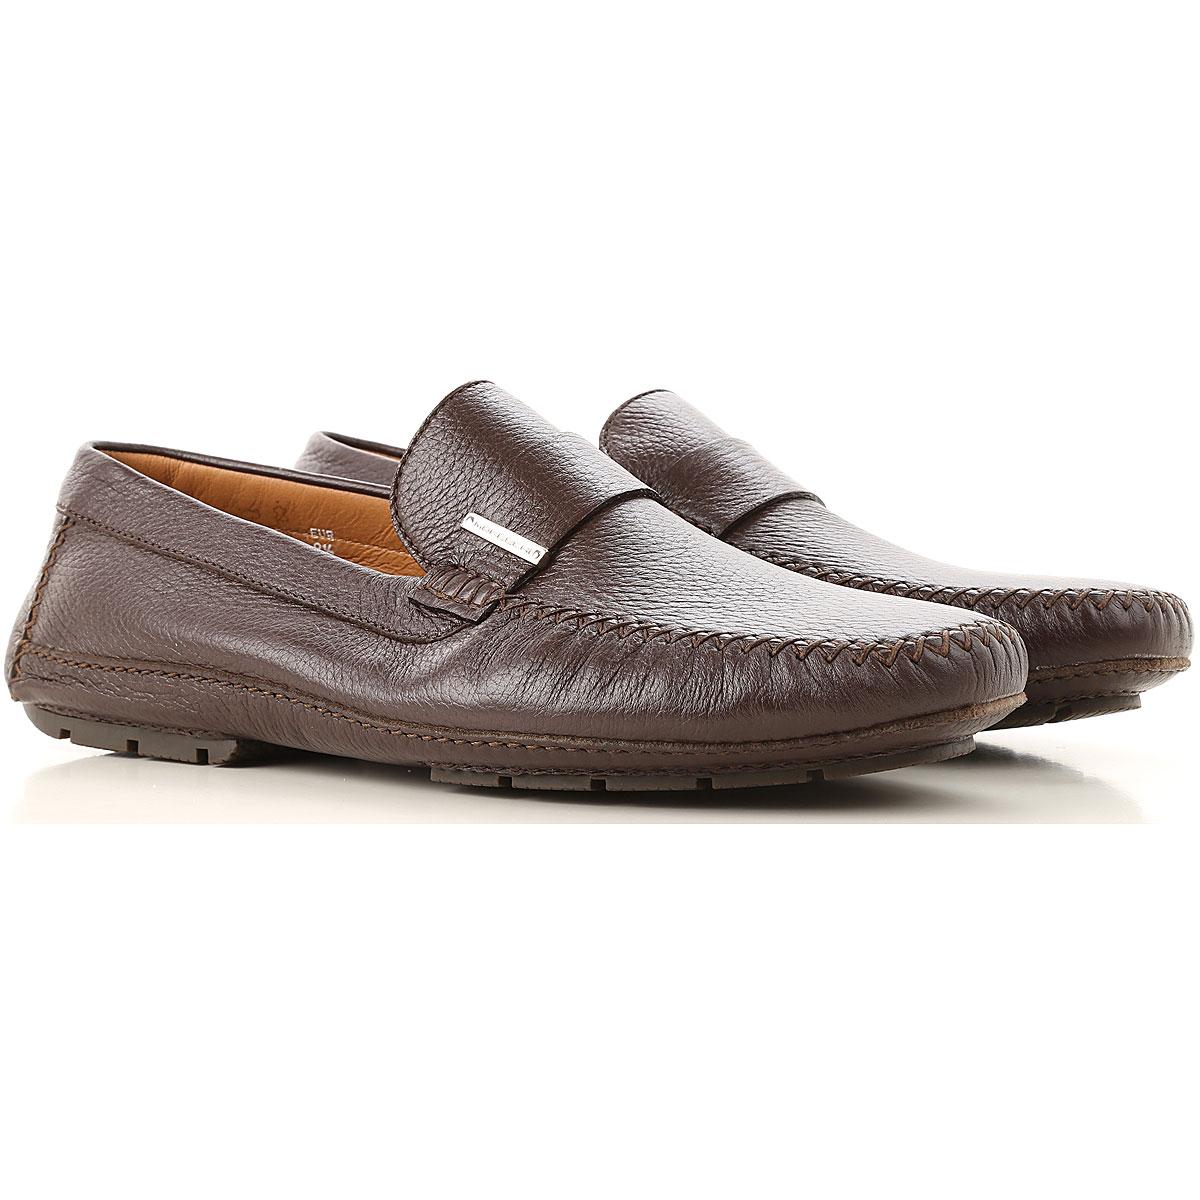 Moreschi Shoes For Men in Brown for Men - Lyst